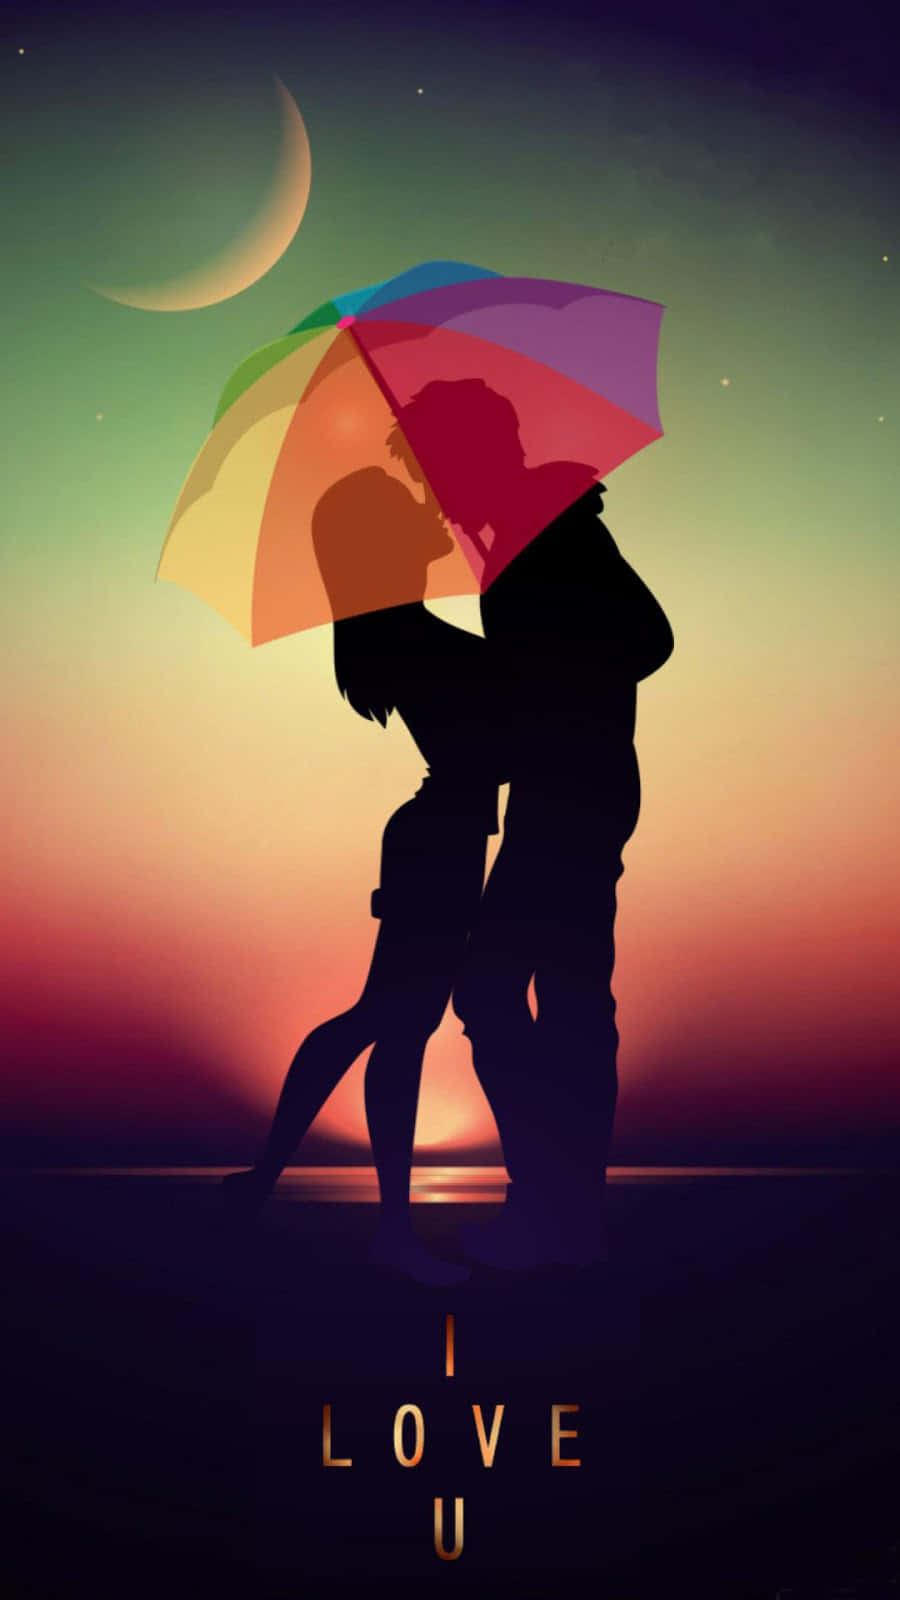 Regenbogensonnenschirm Paar Romantische Hintergrundillustration